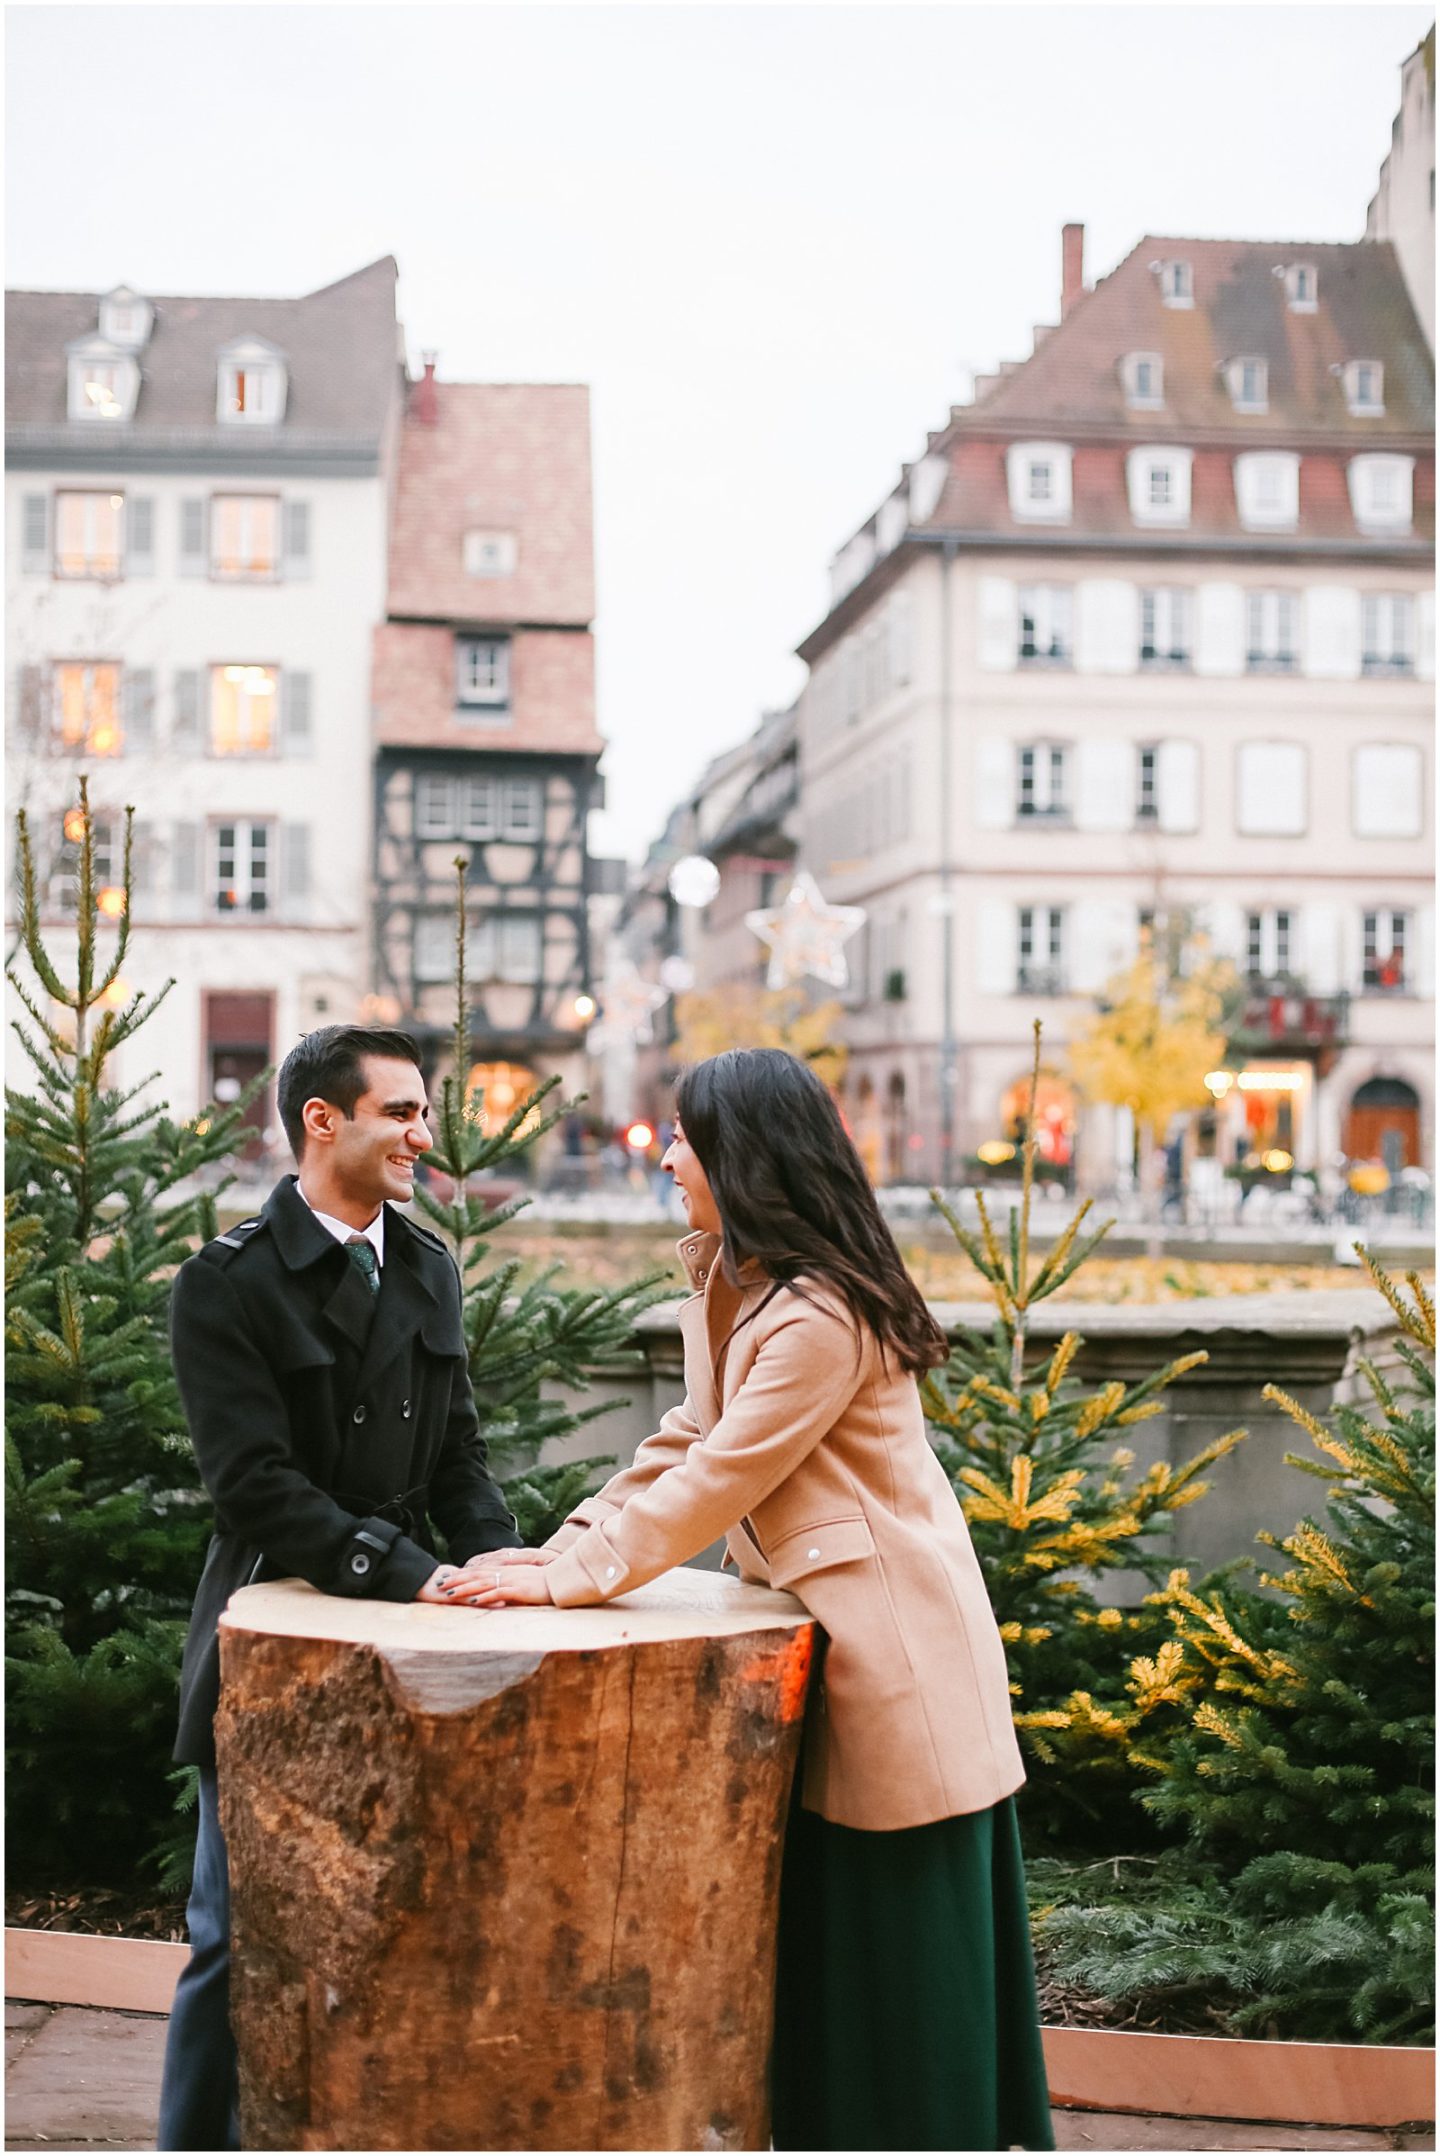 Strasbourg France proposal photographer Helena Woods with engaged couple at Christmas market